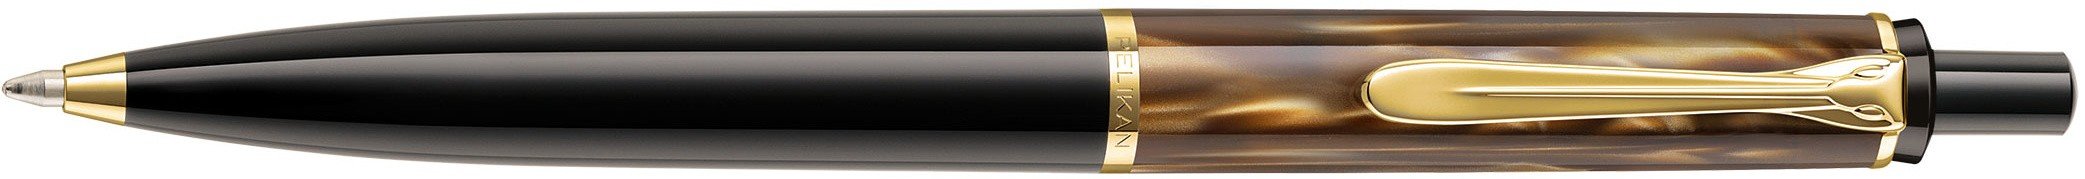 Ручка шариковая Pelikan Elegance Classic K200 Brown-Marbled